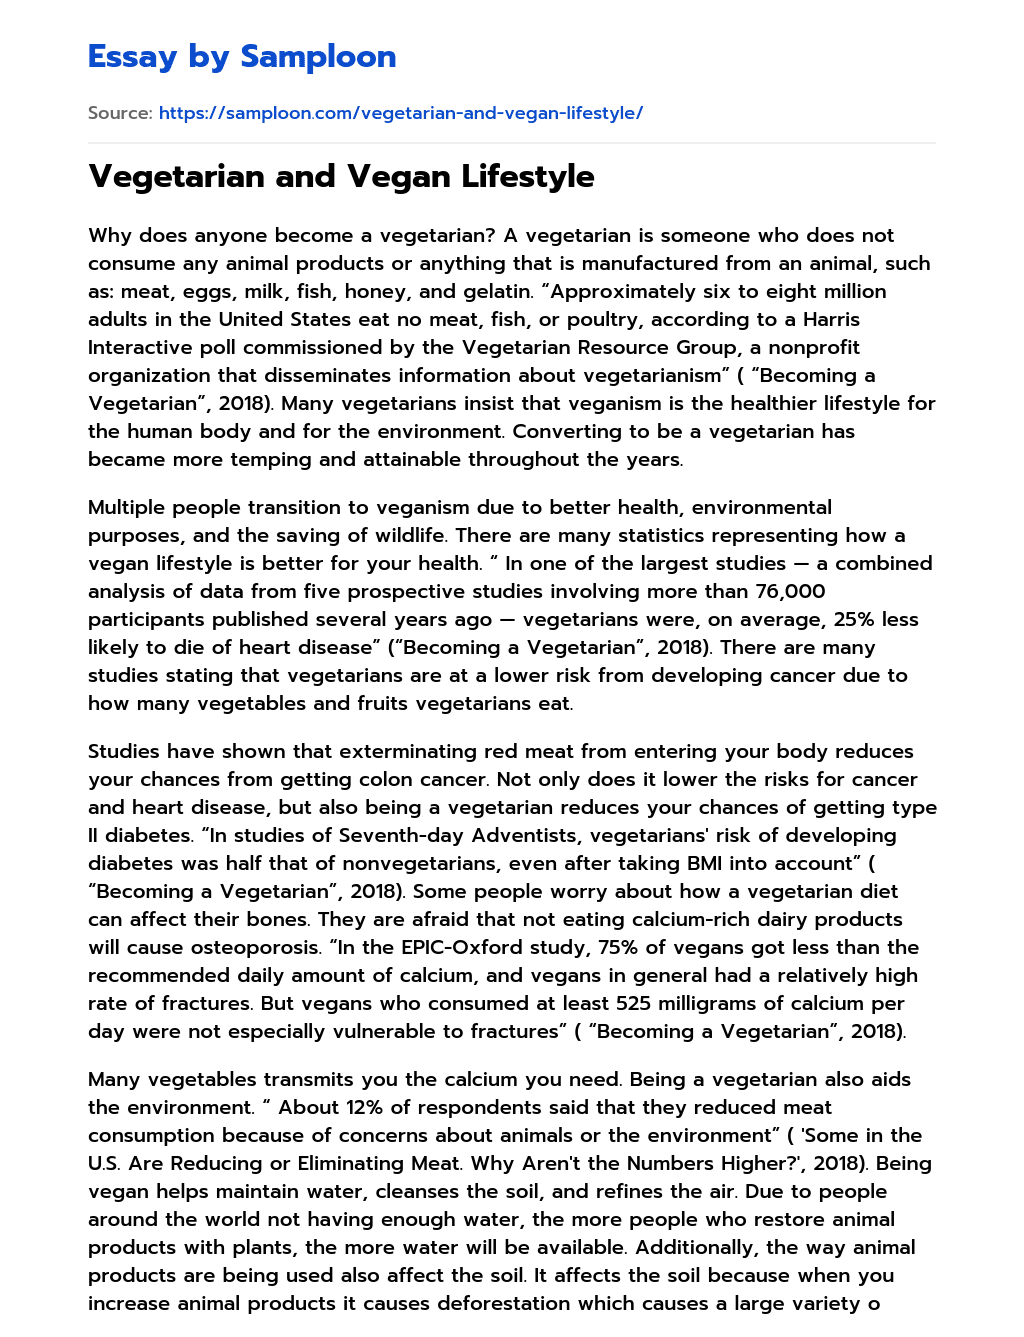 what central argument does the essay make vegan